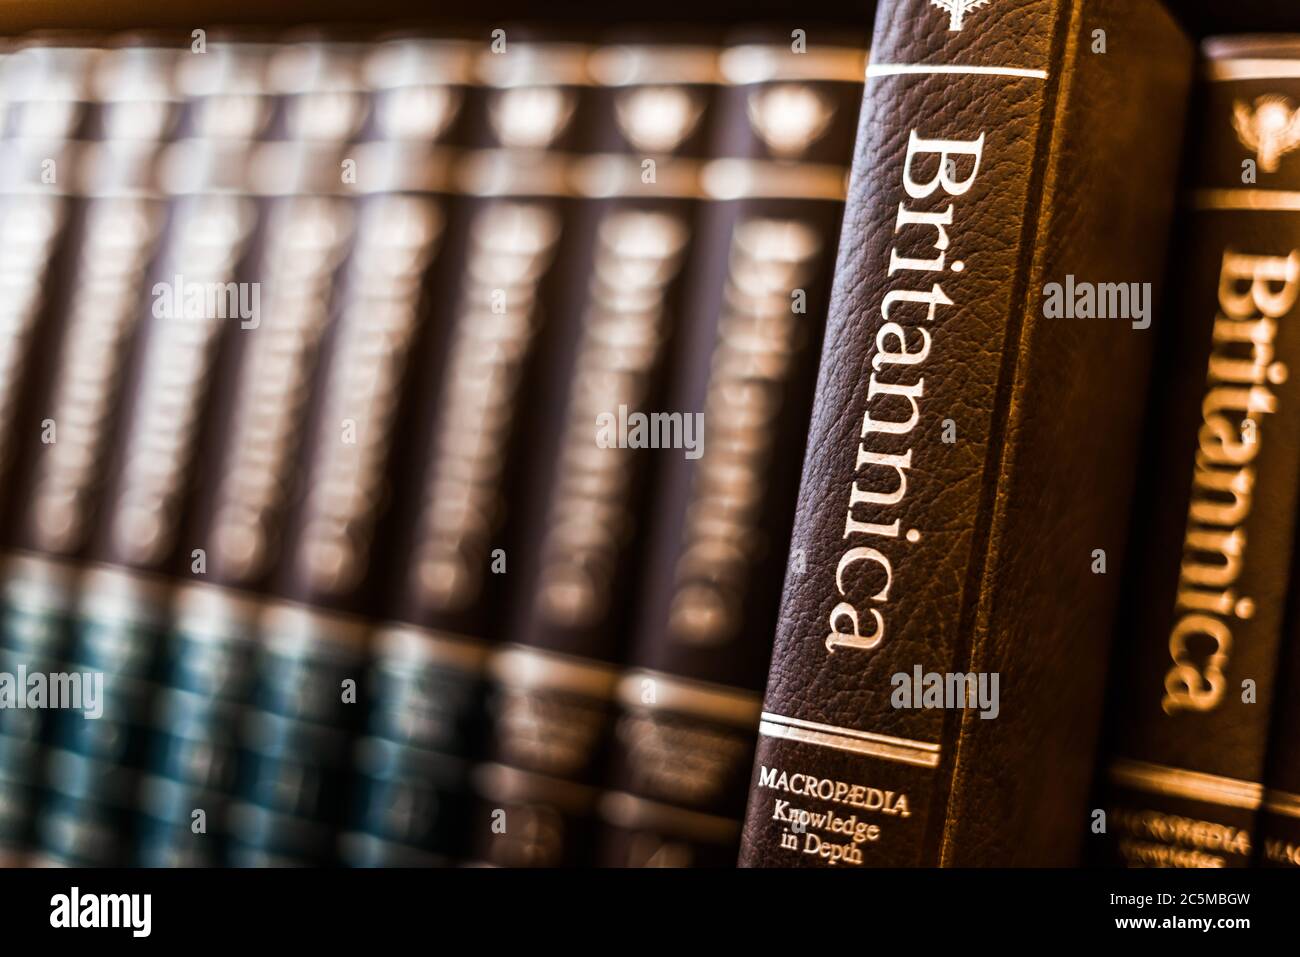 POZNAN, POL - FEB 03, 2020: Encyclopedia Britannica volumes on a shelf in a public library Stock Photo